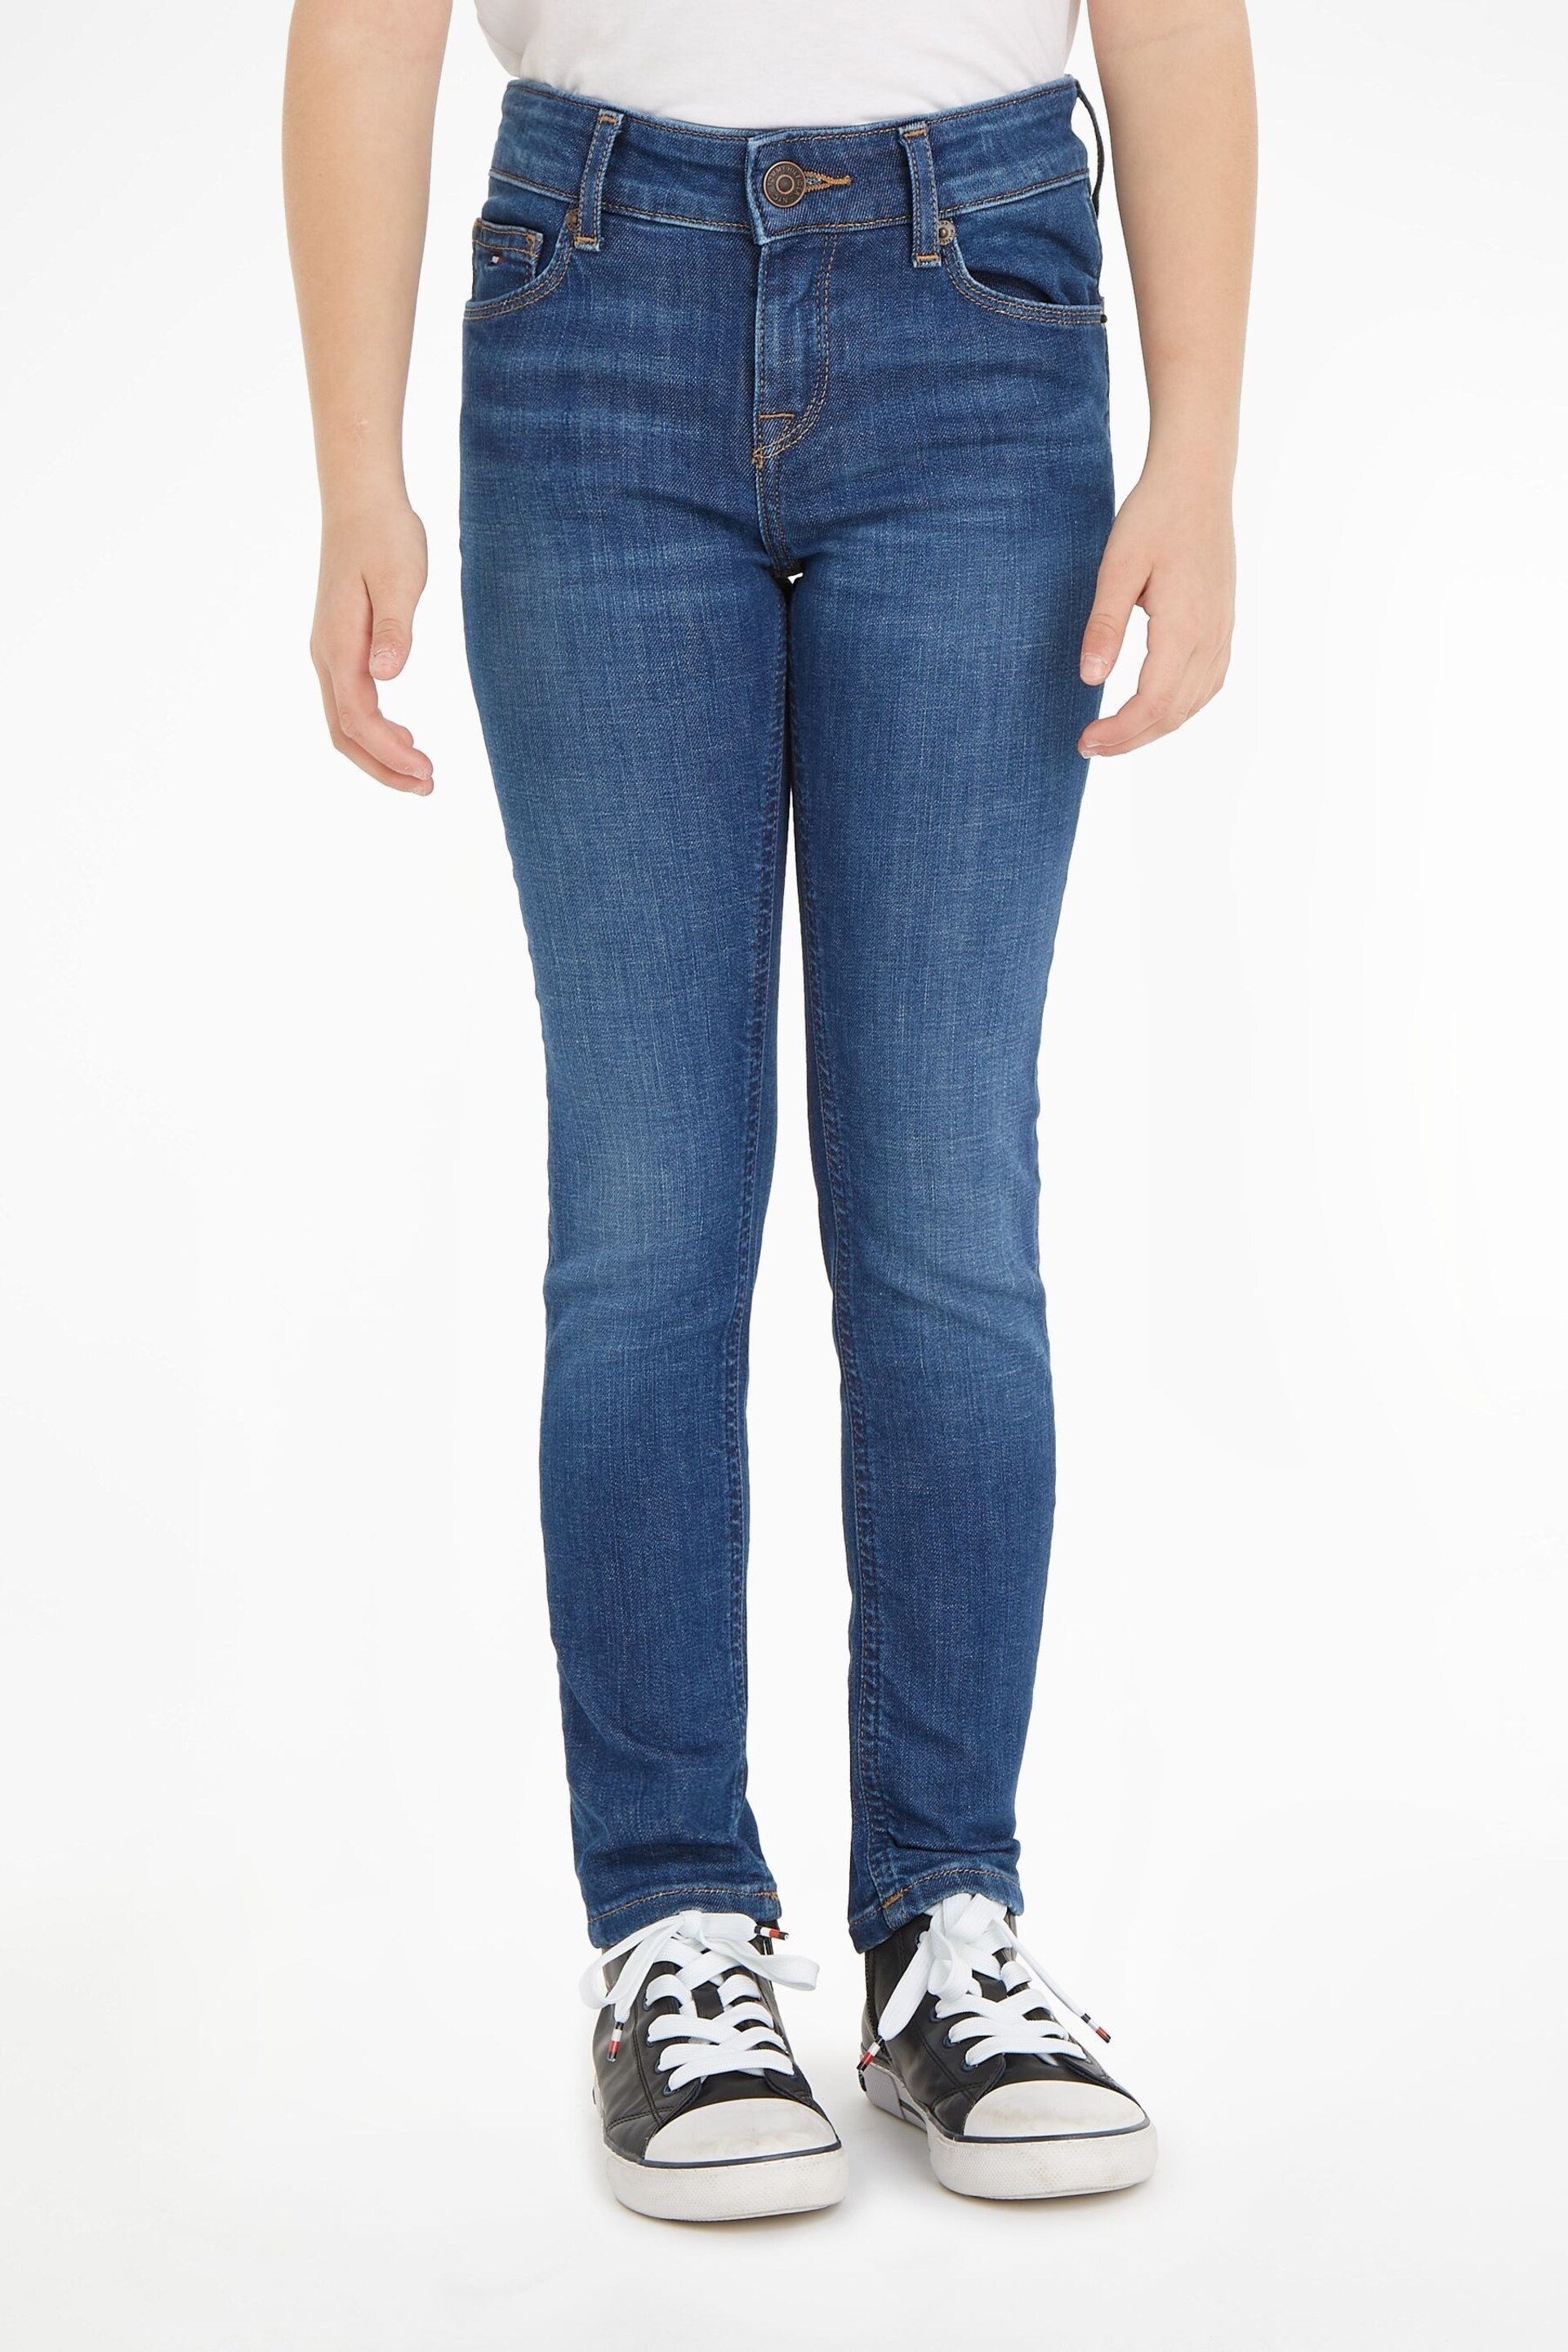 Tommy Hilfiger Blue Nora Dark Wash Jeans - Image 1 of 6